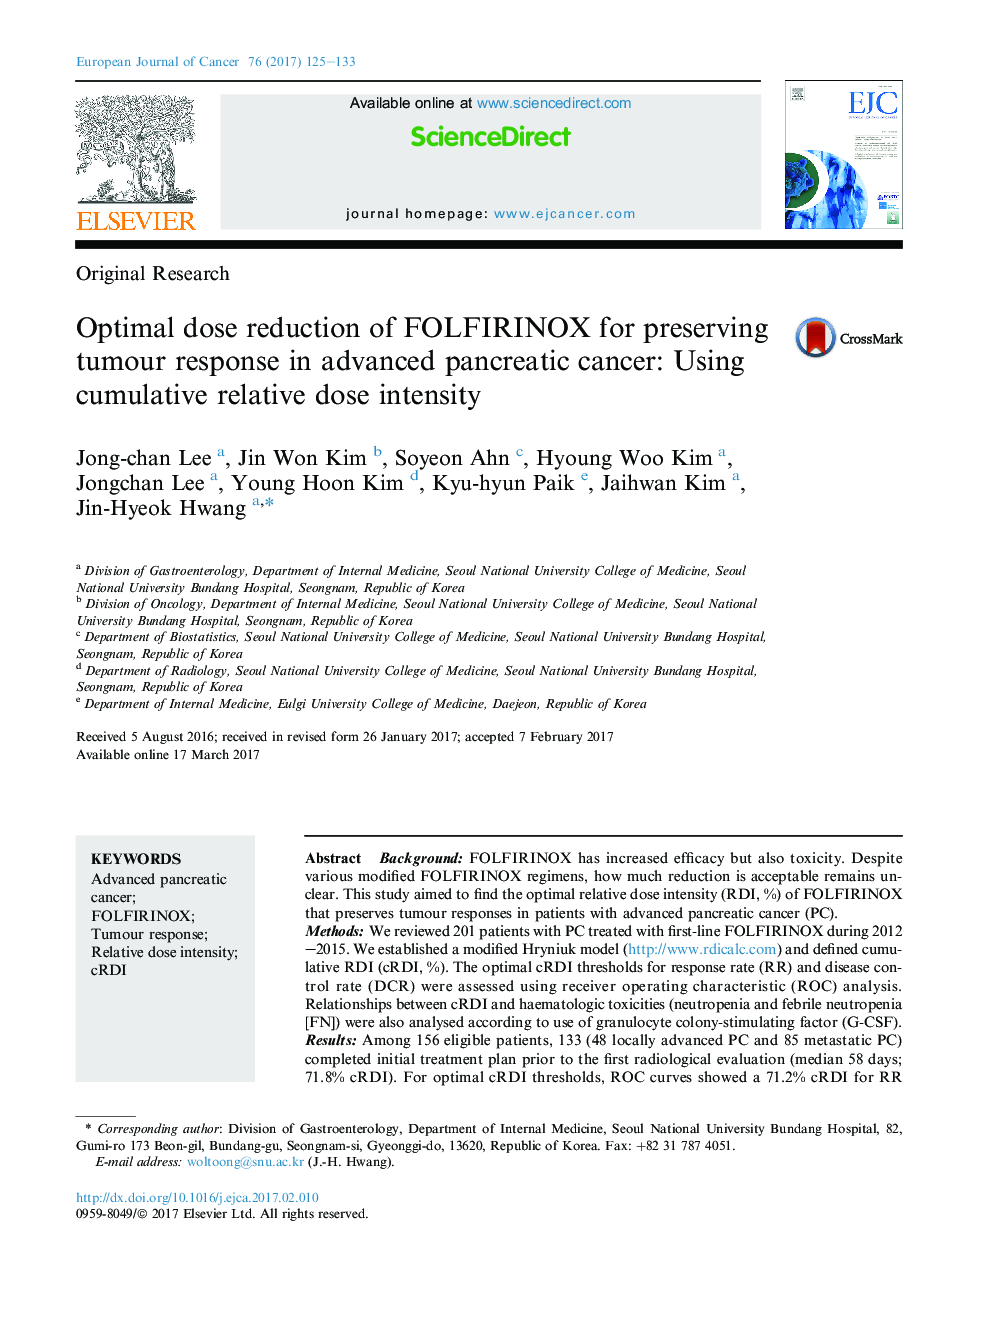 Original ResearchOptimal dose reduction of FOLFIRINOX for preserving tumour response in advanced pancreatic cancer: Using cumulative relative dose intensity